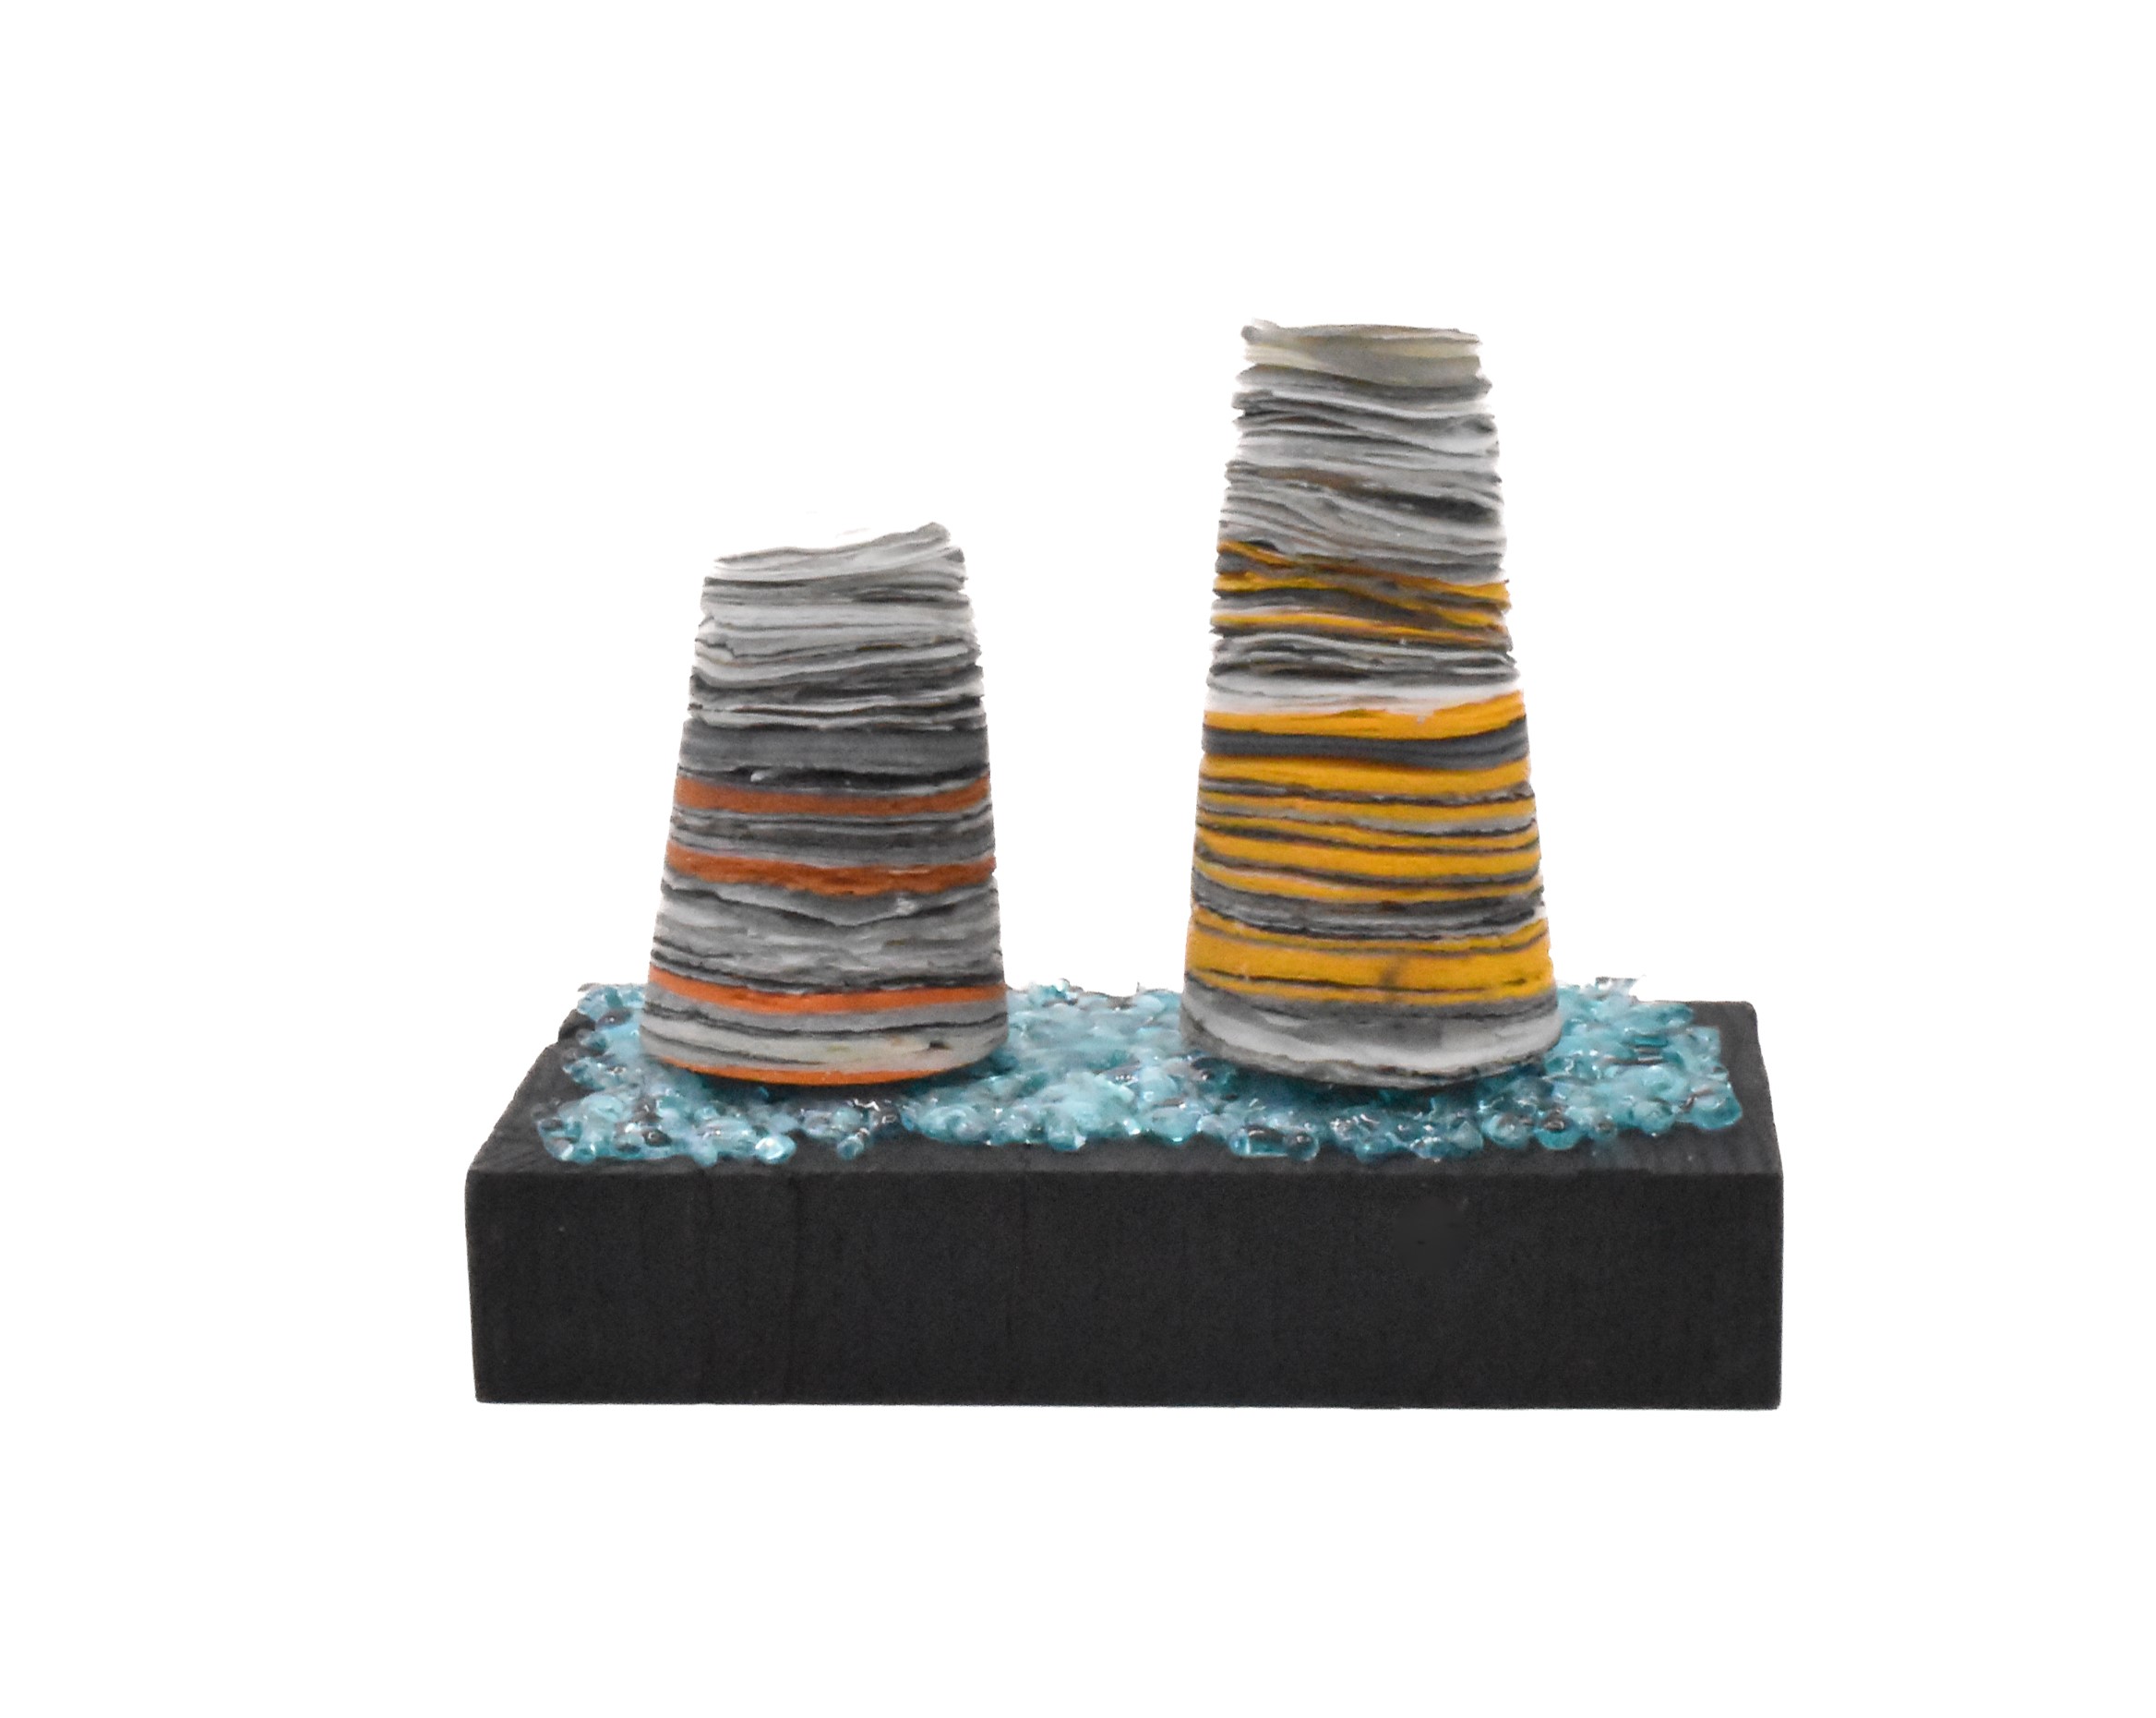 Alison Jardine 'Orange and grey stacks 1' 12(h)x16x9 Glass , silver leaf, paint, wood